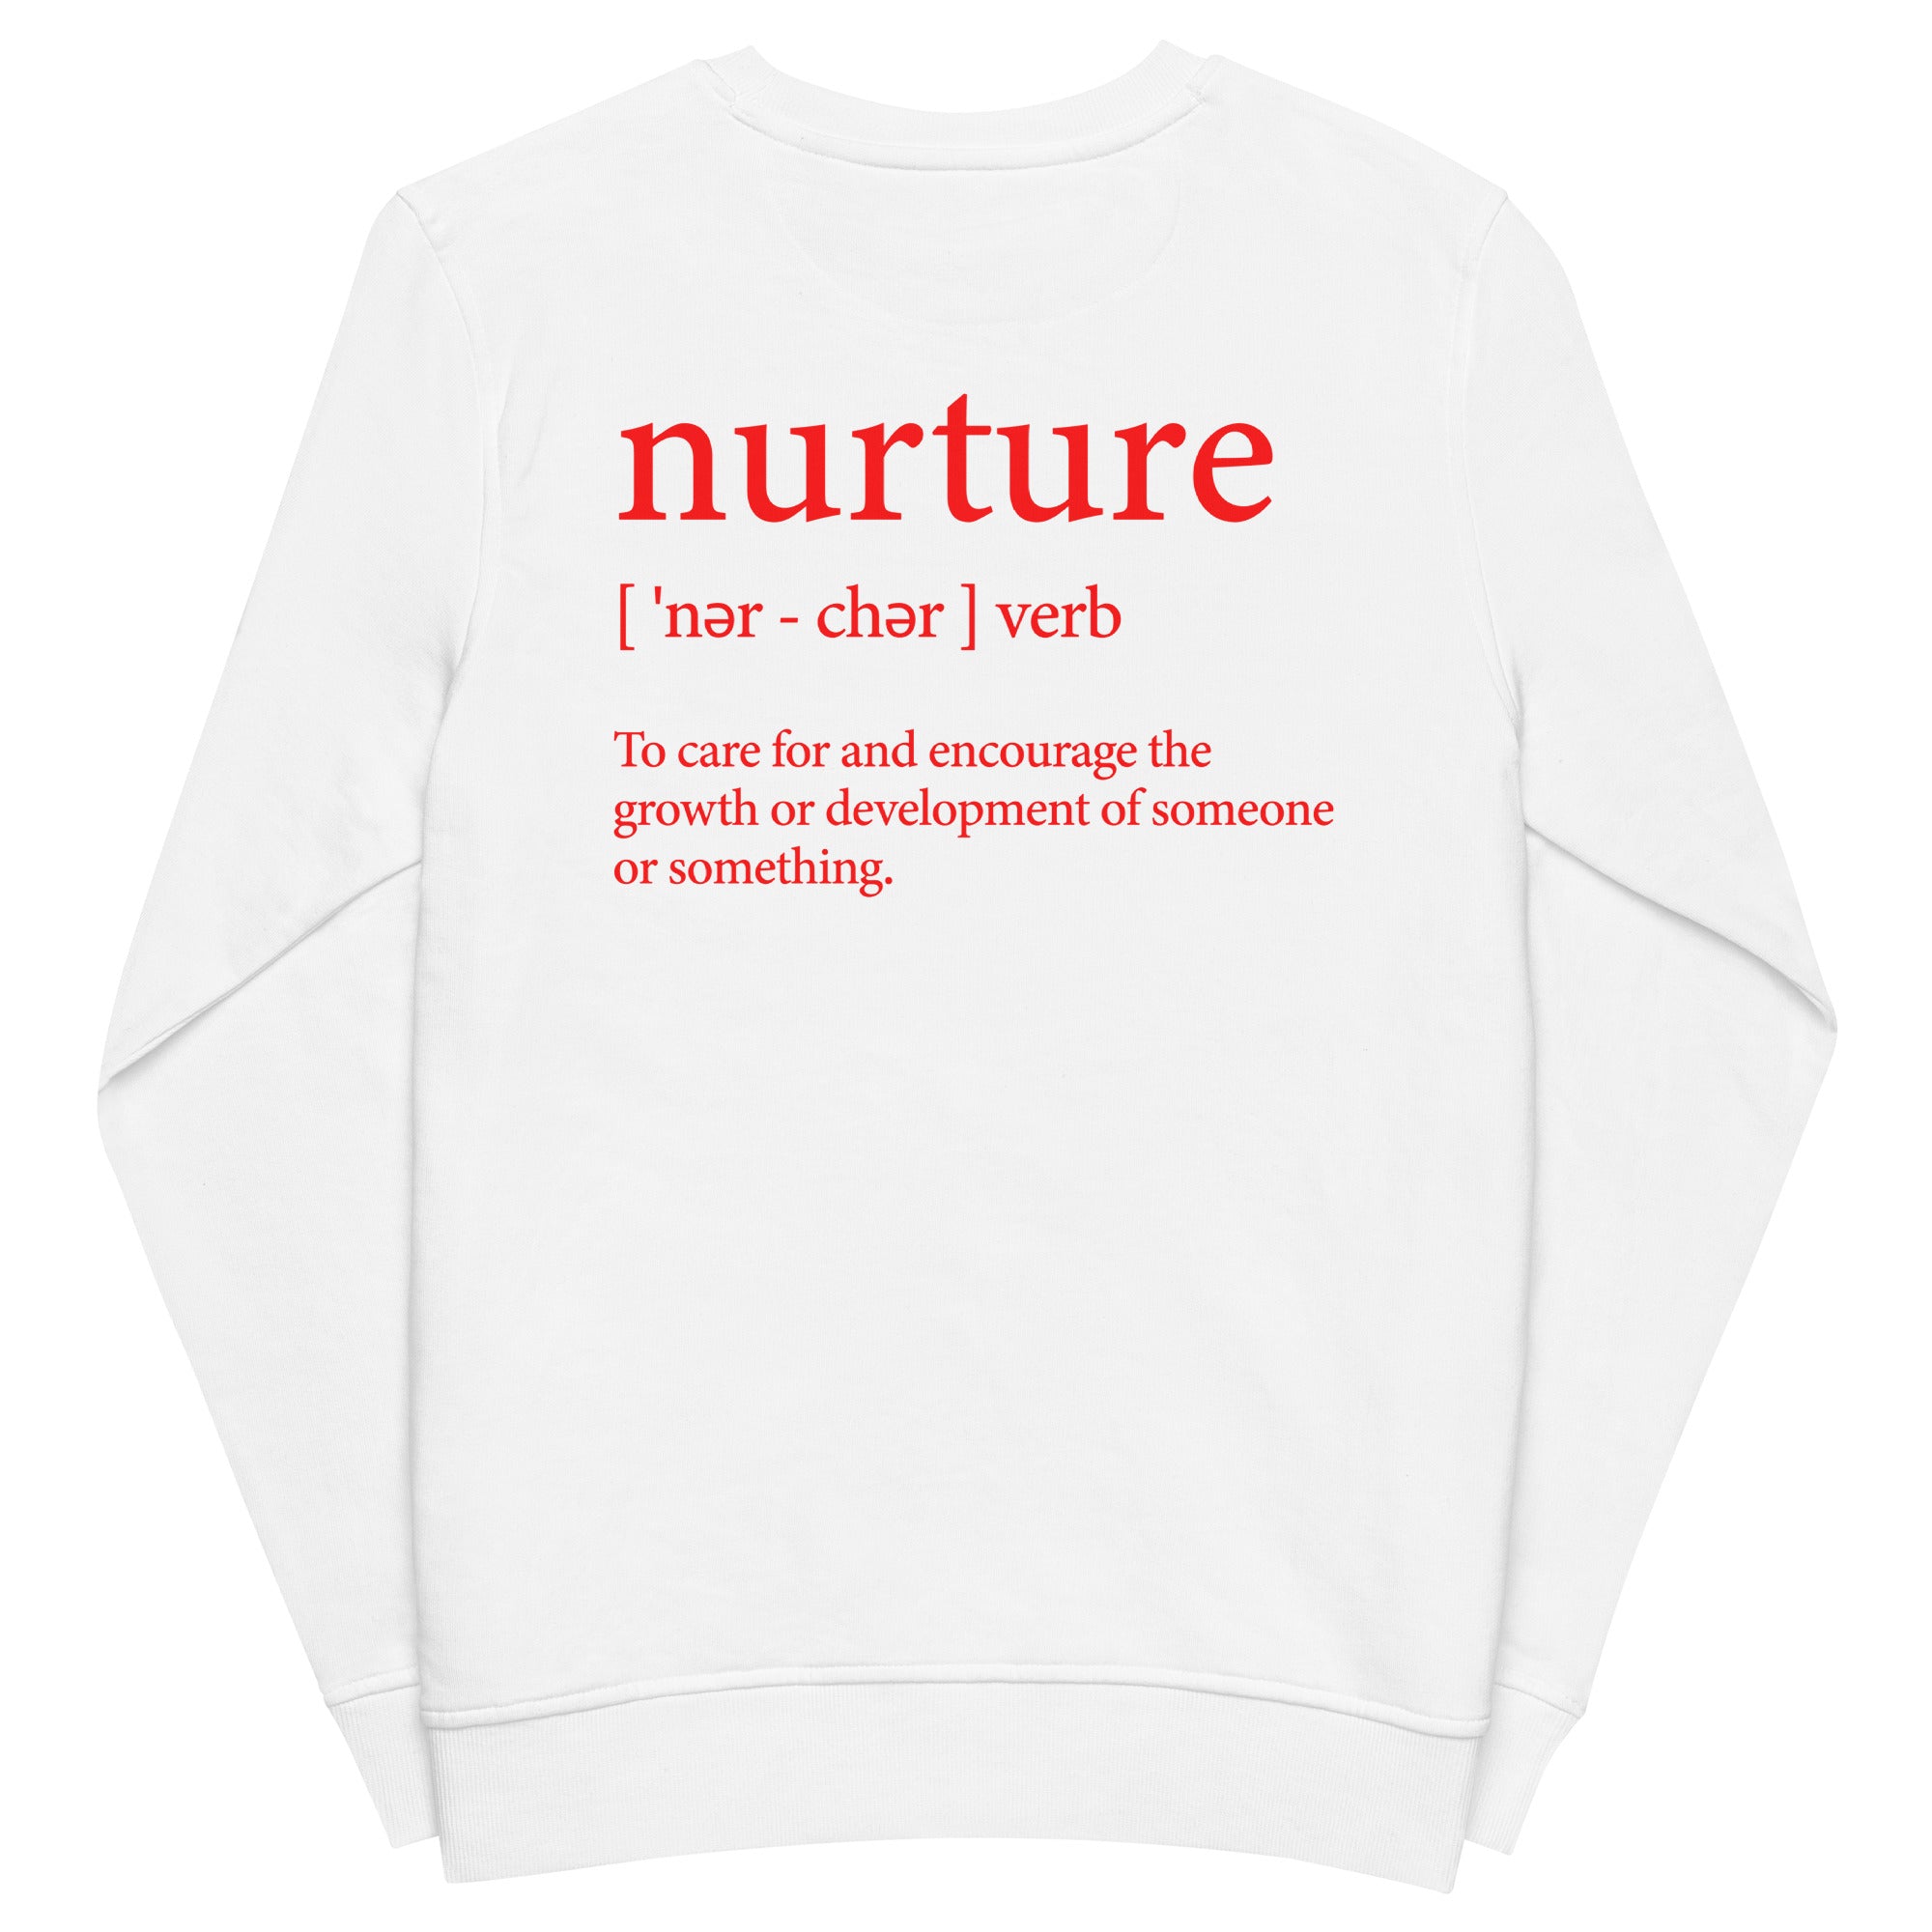 Nurture Your Roots Unisex Organic Sweatshirt Special Edition